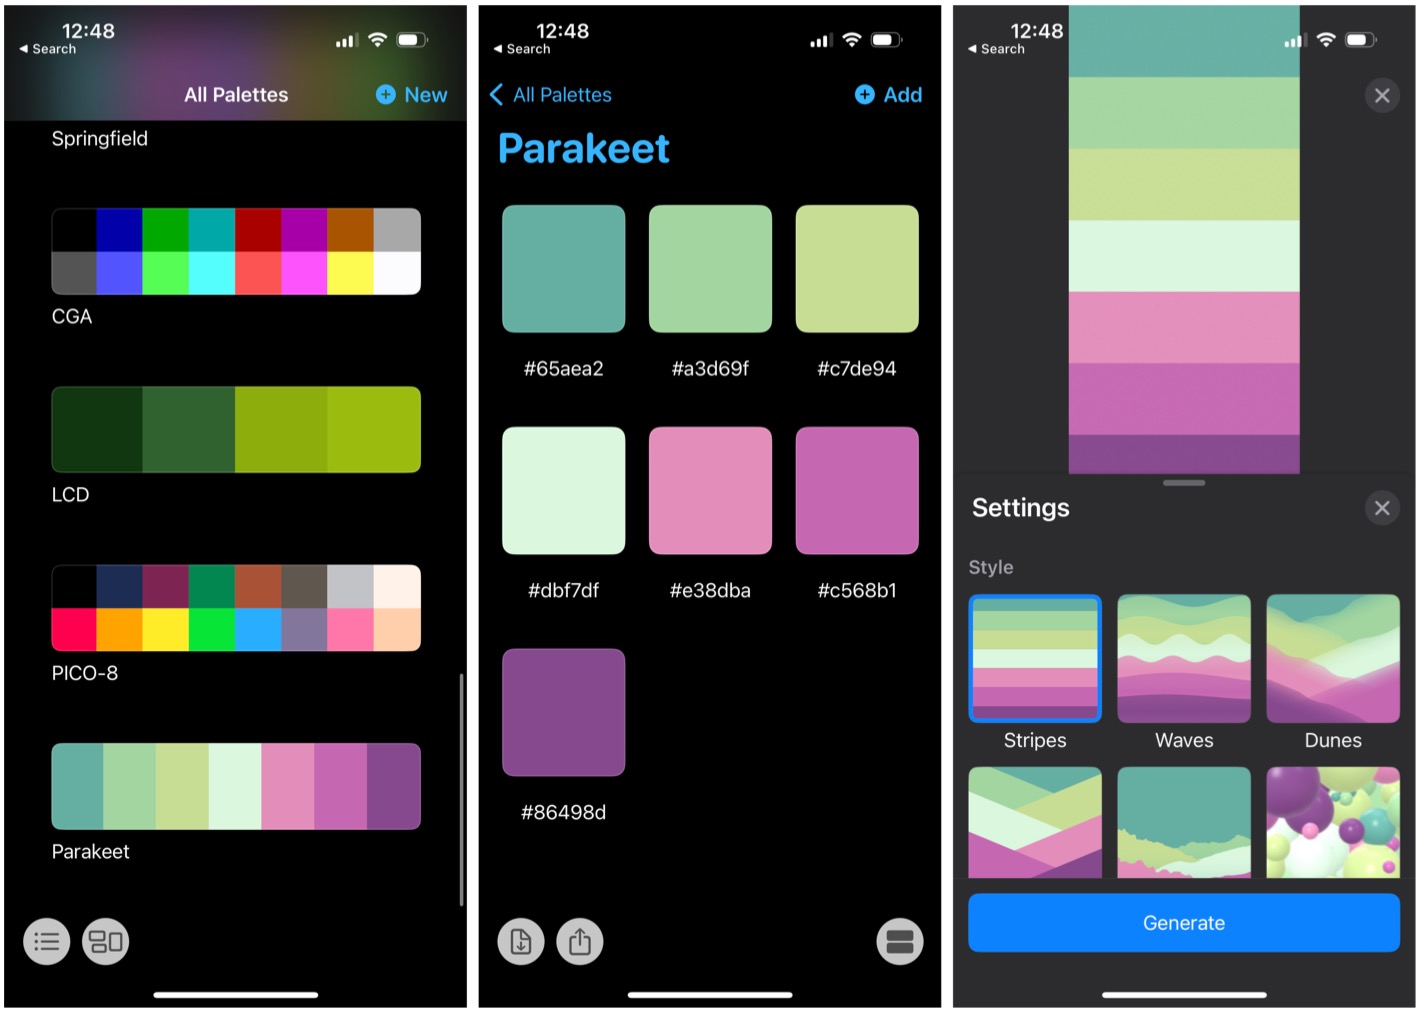 Screenshots of the Pastel app on iOS